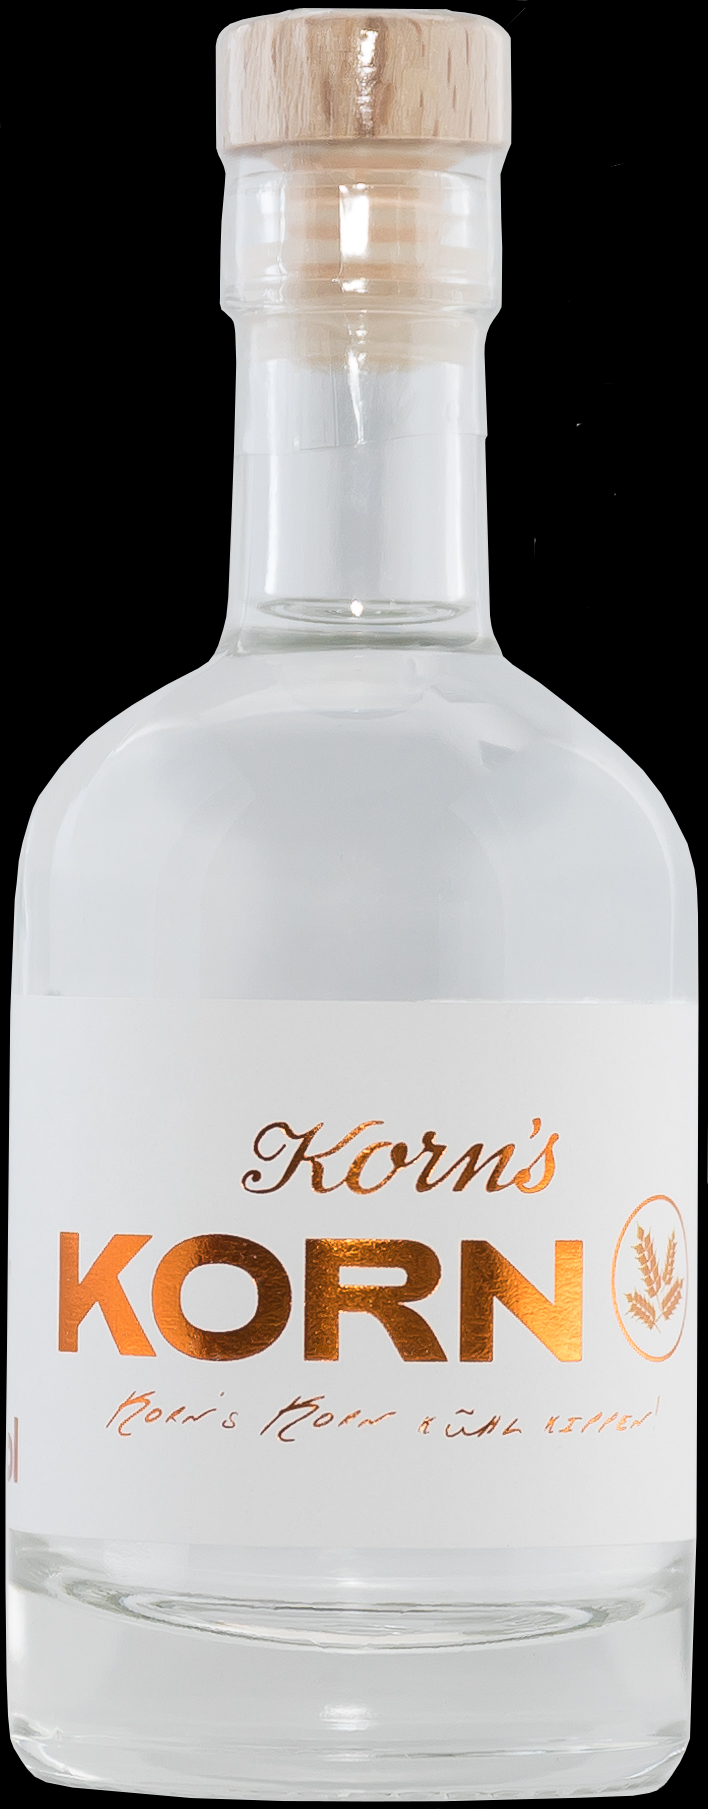 Korn's Korn Kleinflasche